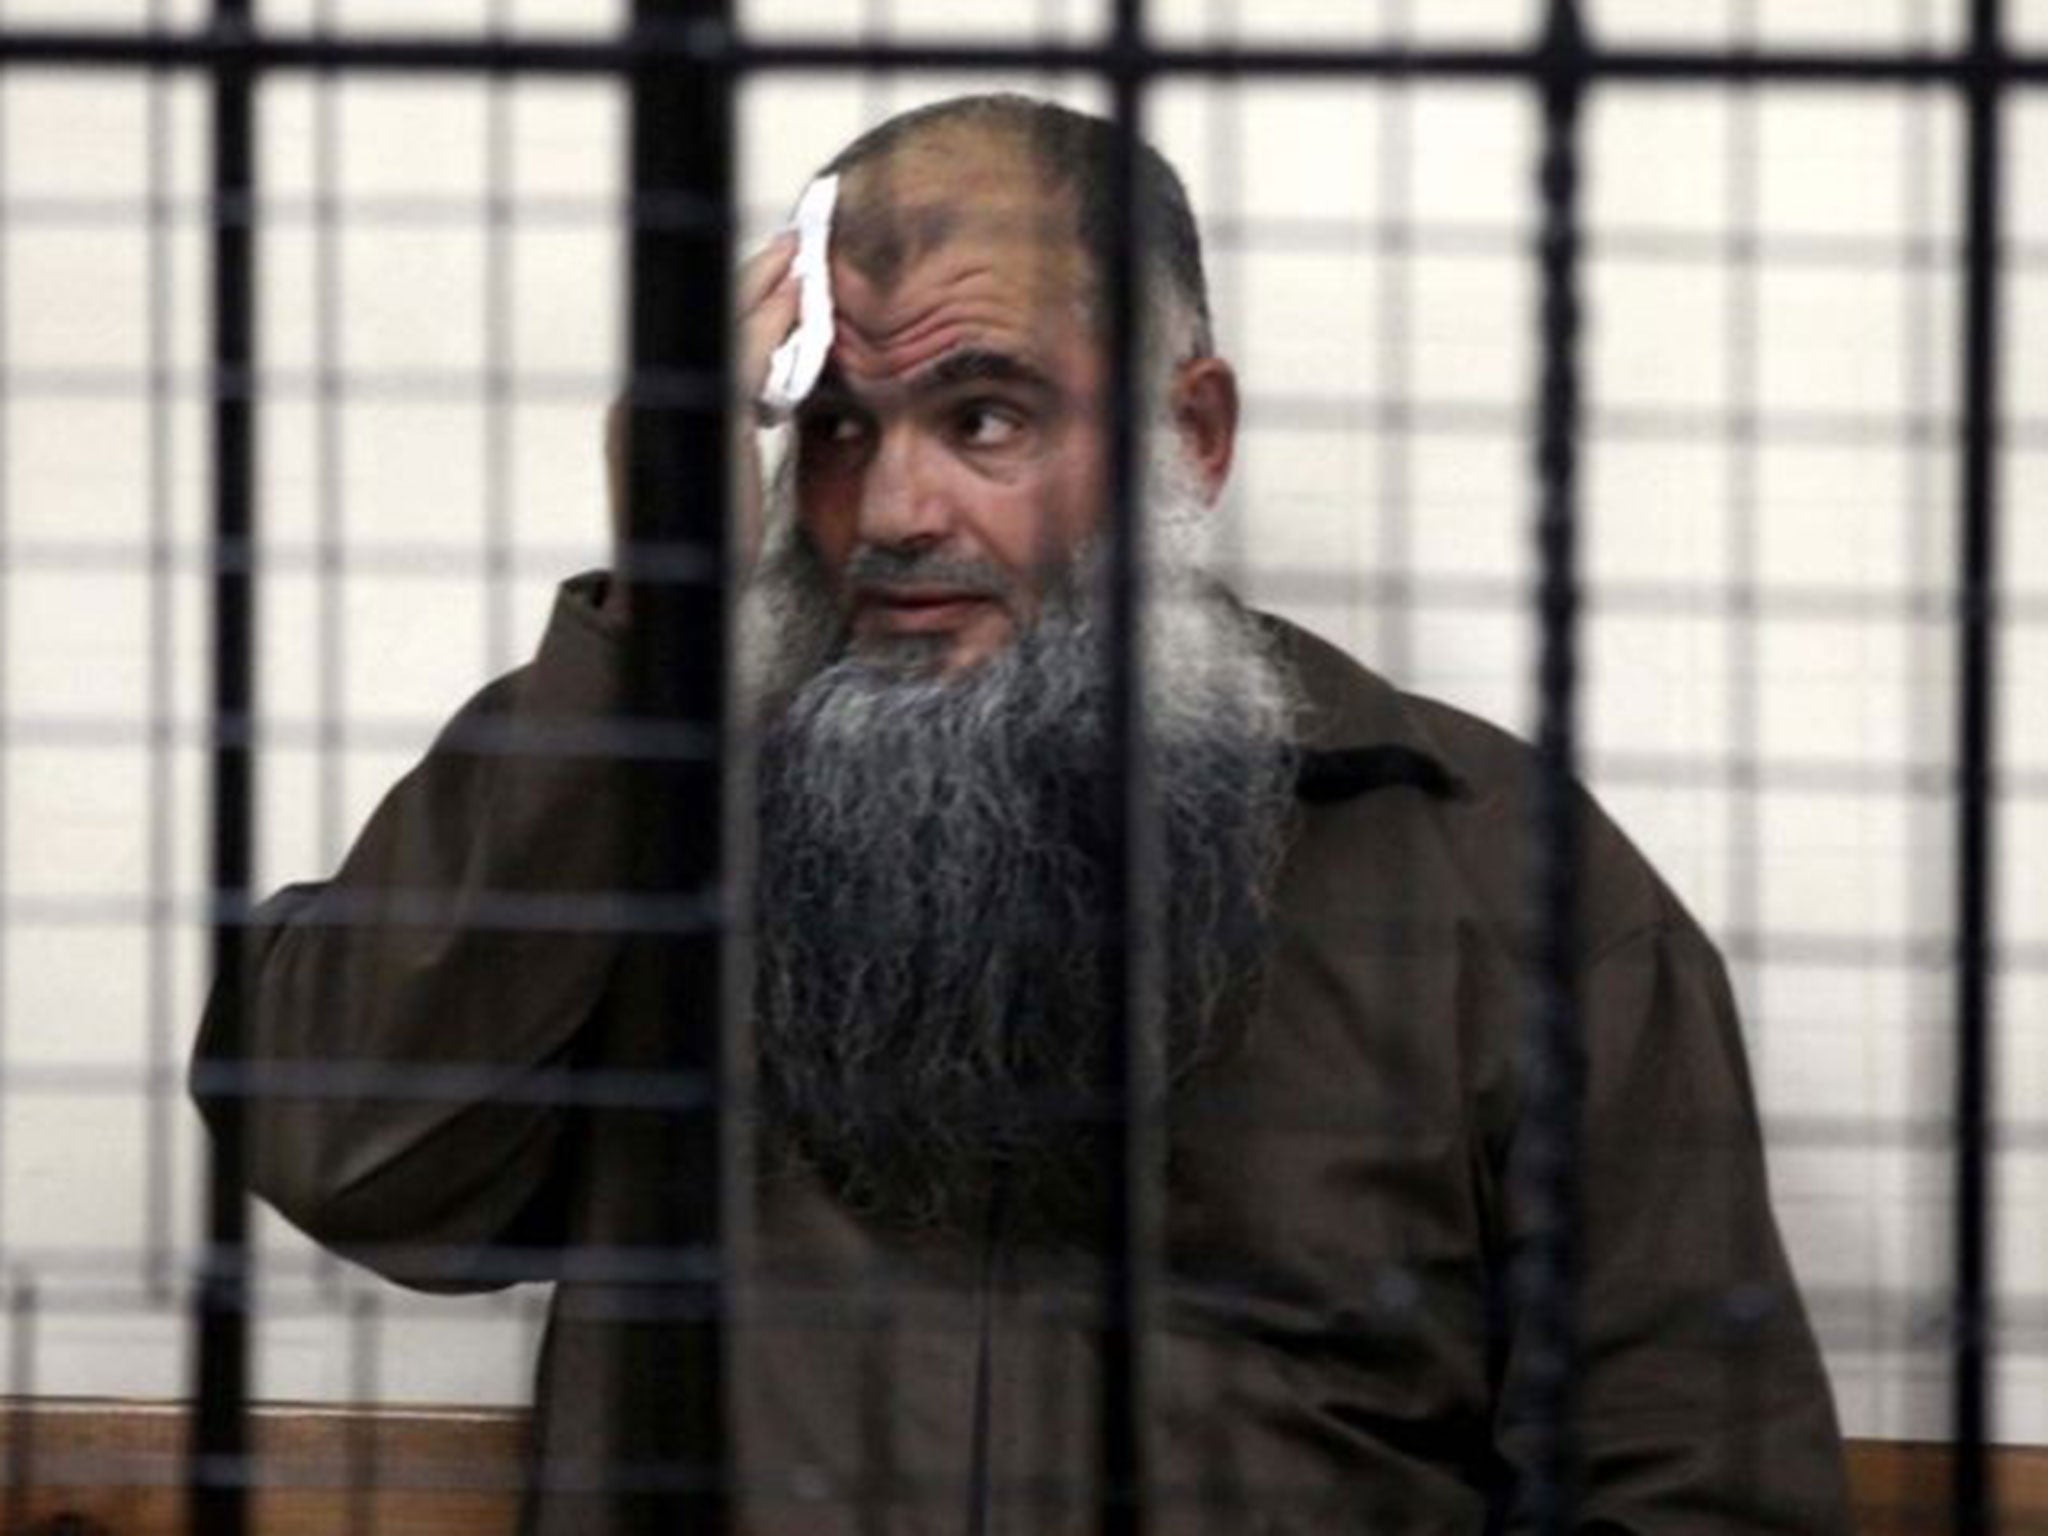 Abu Qatada behind bars in court. The radical Islamist preacher will not be allowed to return to Britain.